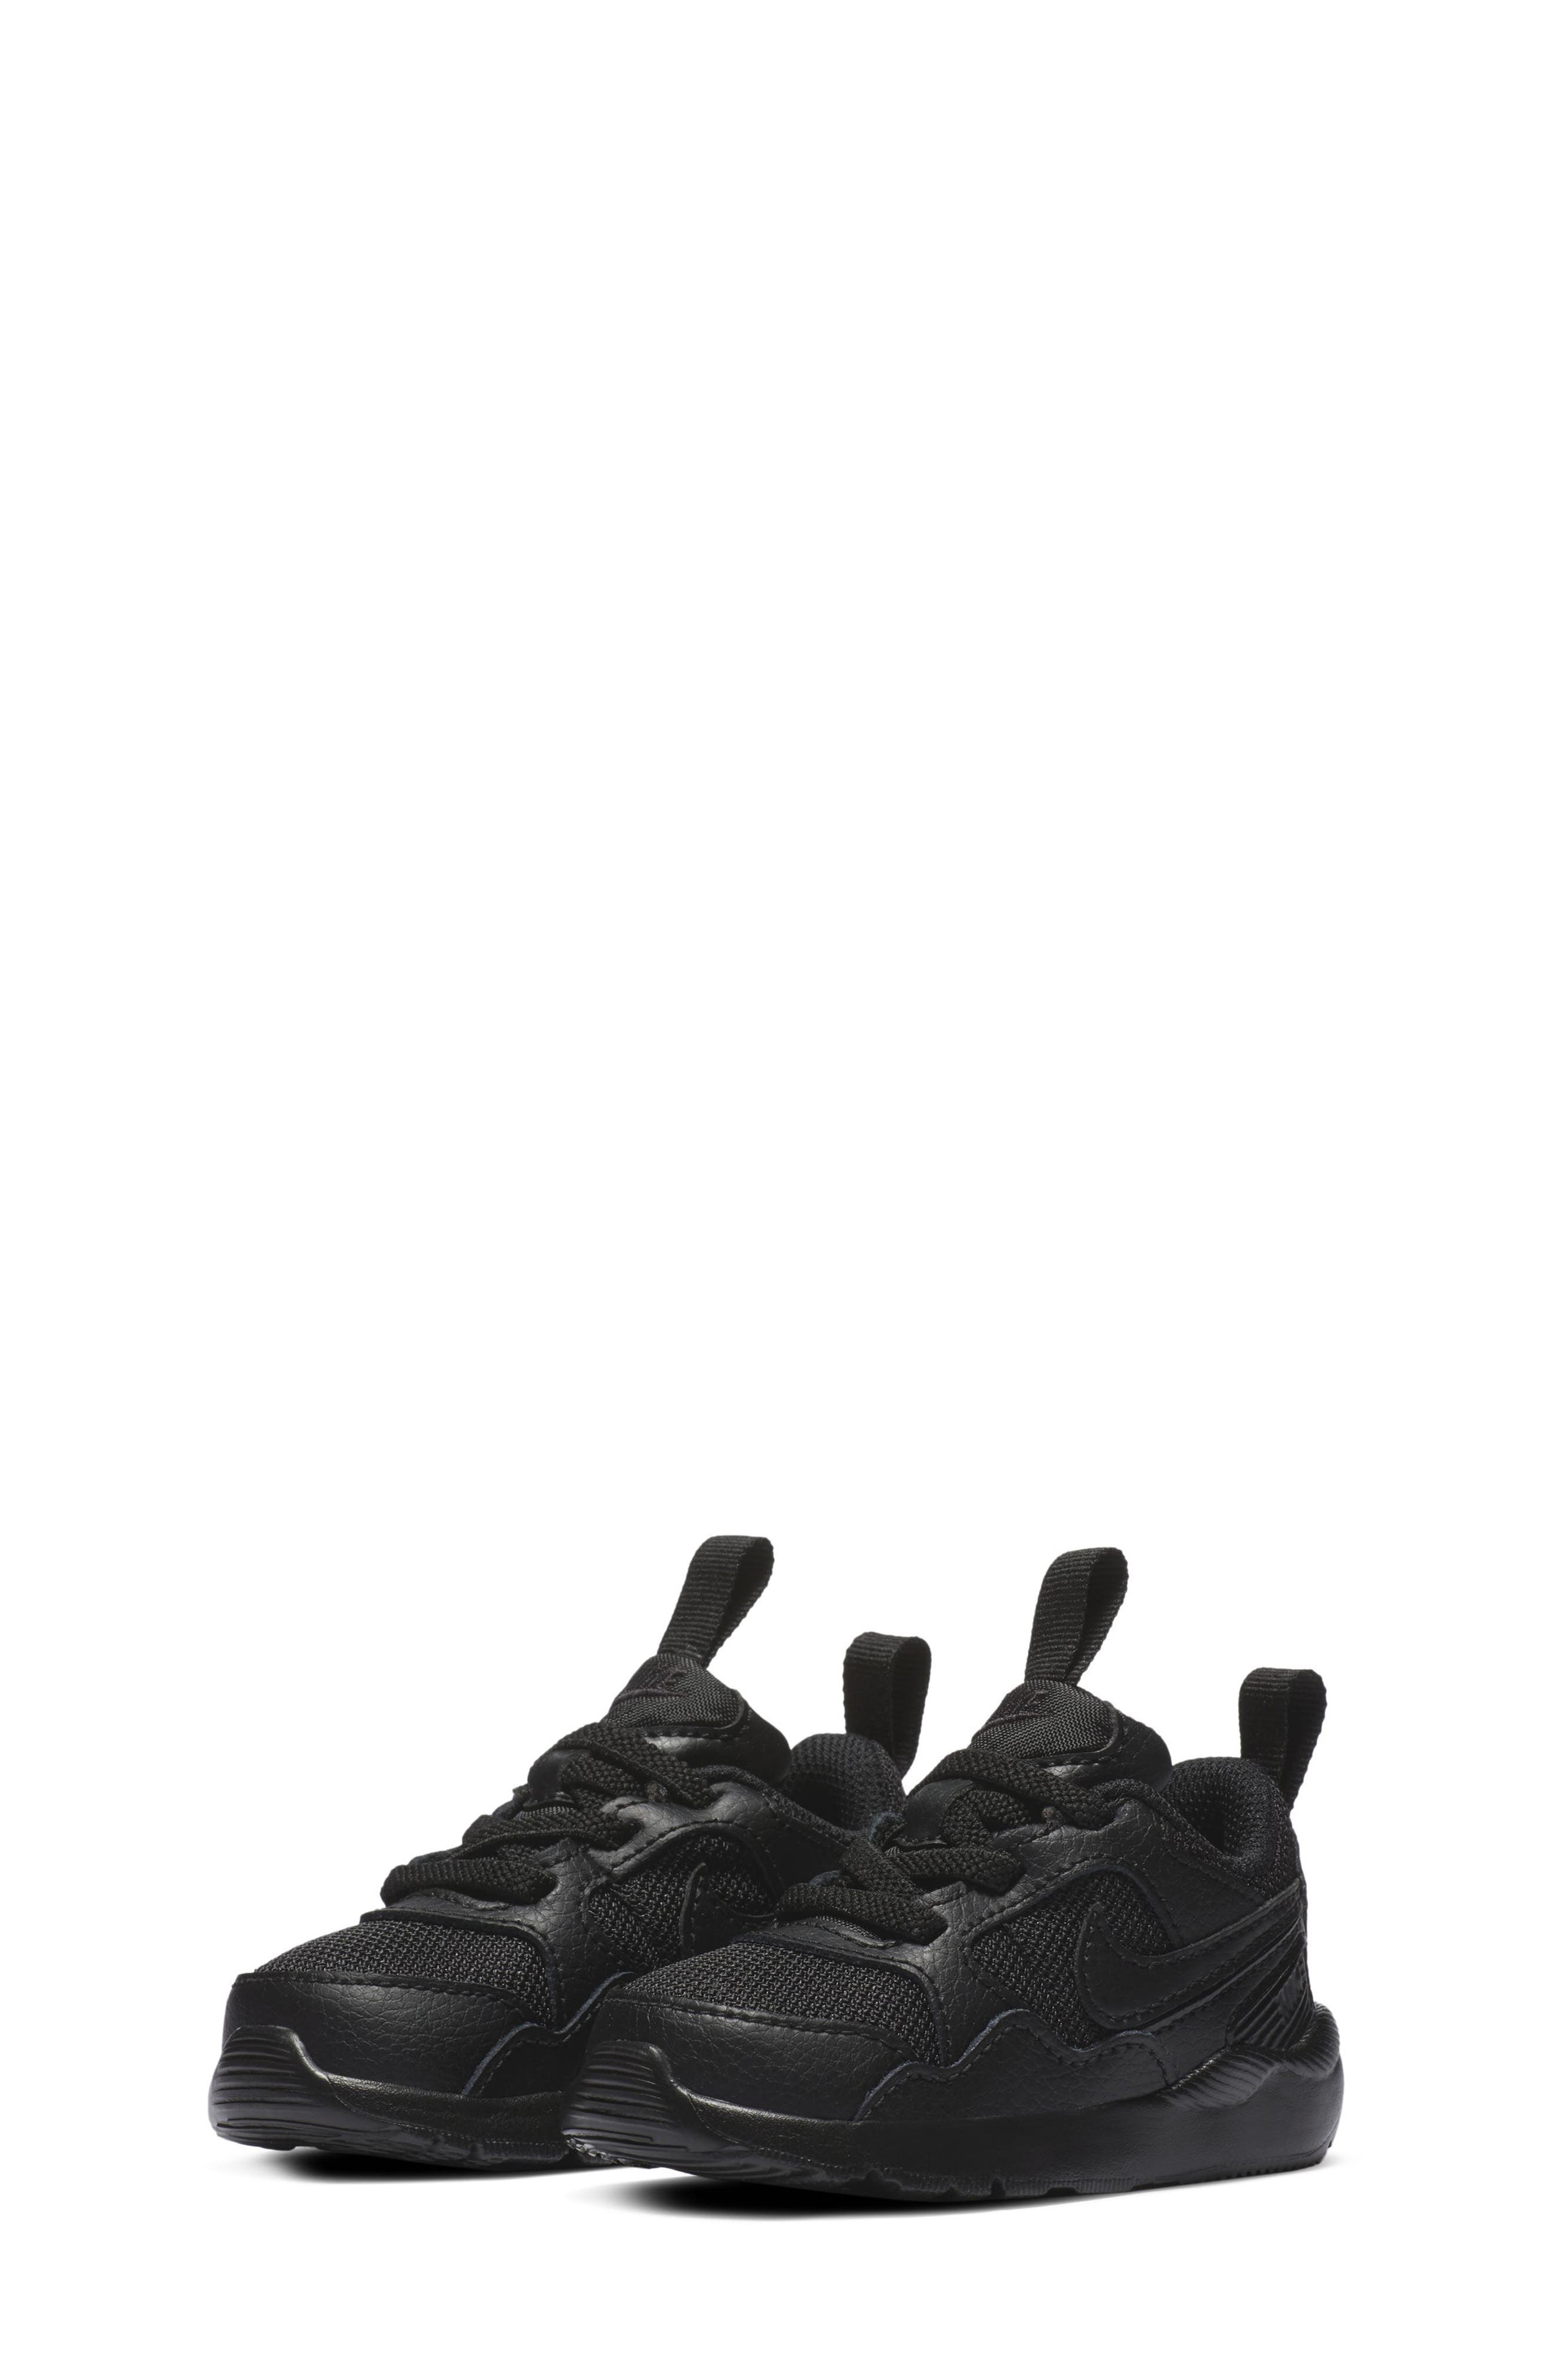 black nike baby shoes